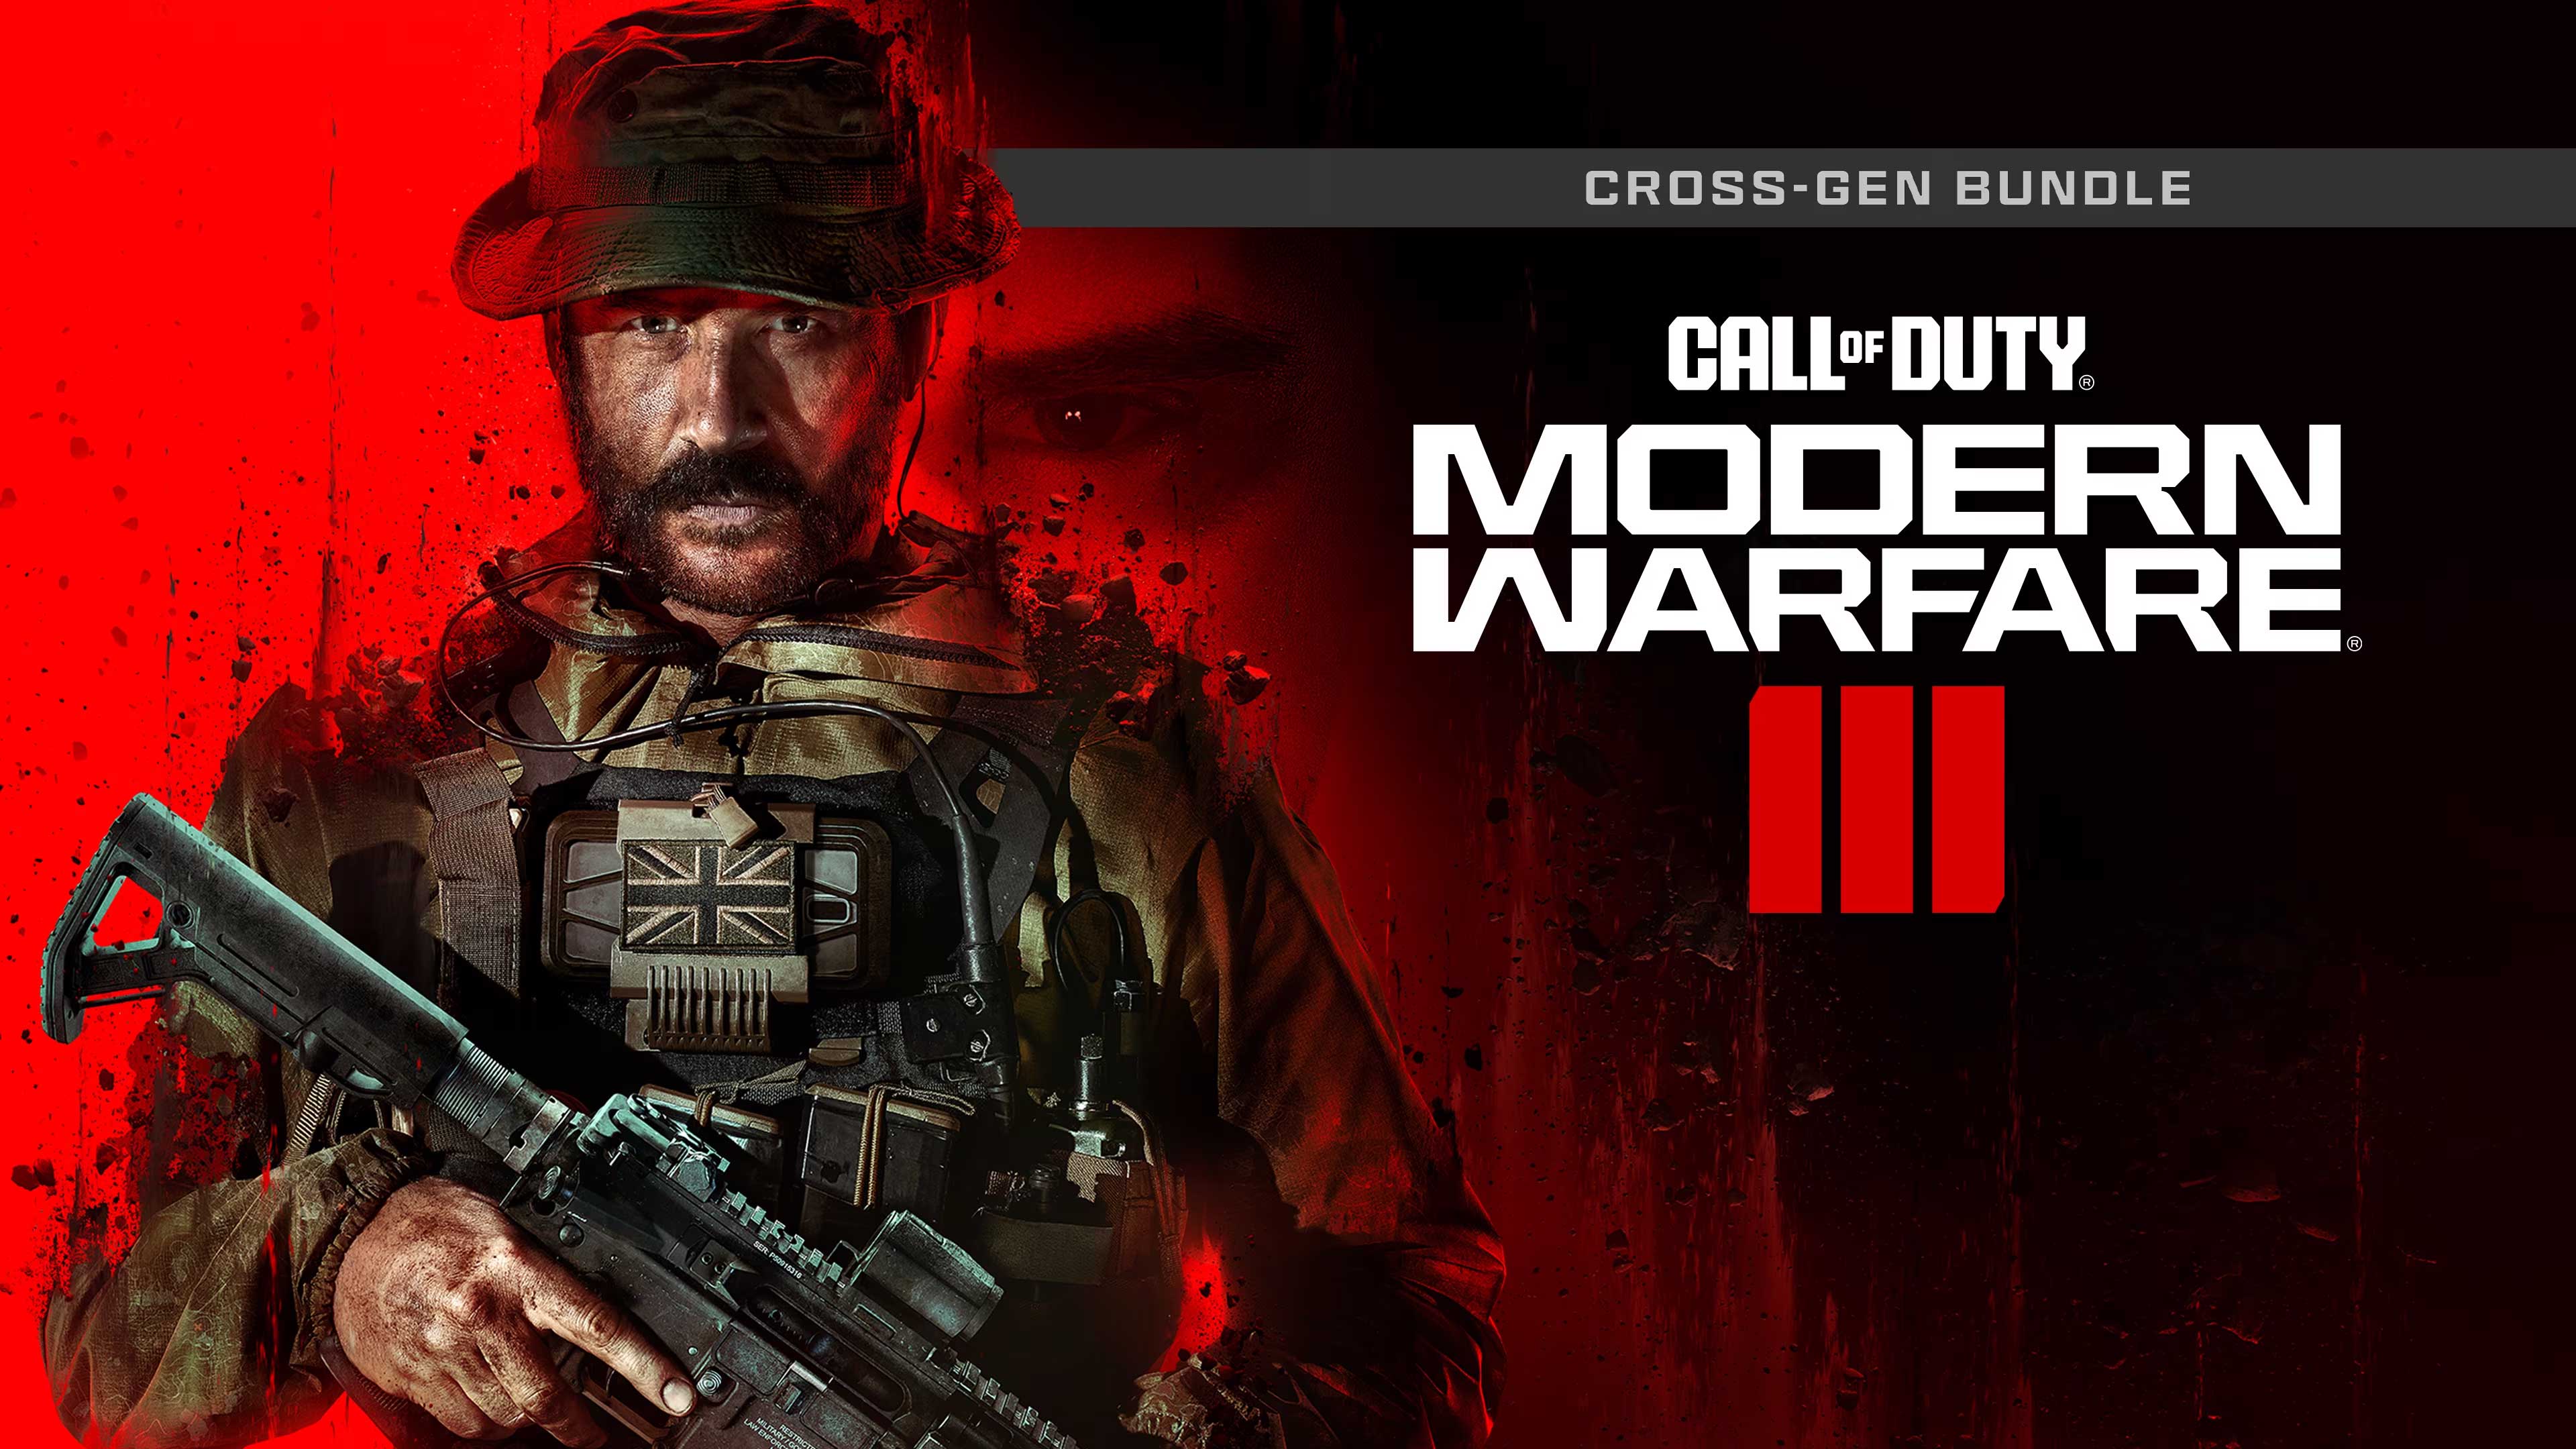 Call of Duty: Modern Warfare III - Cross-Gen Bundle, Gameination, gameination.com